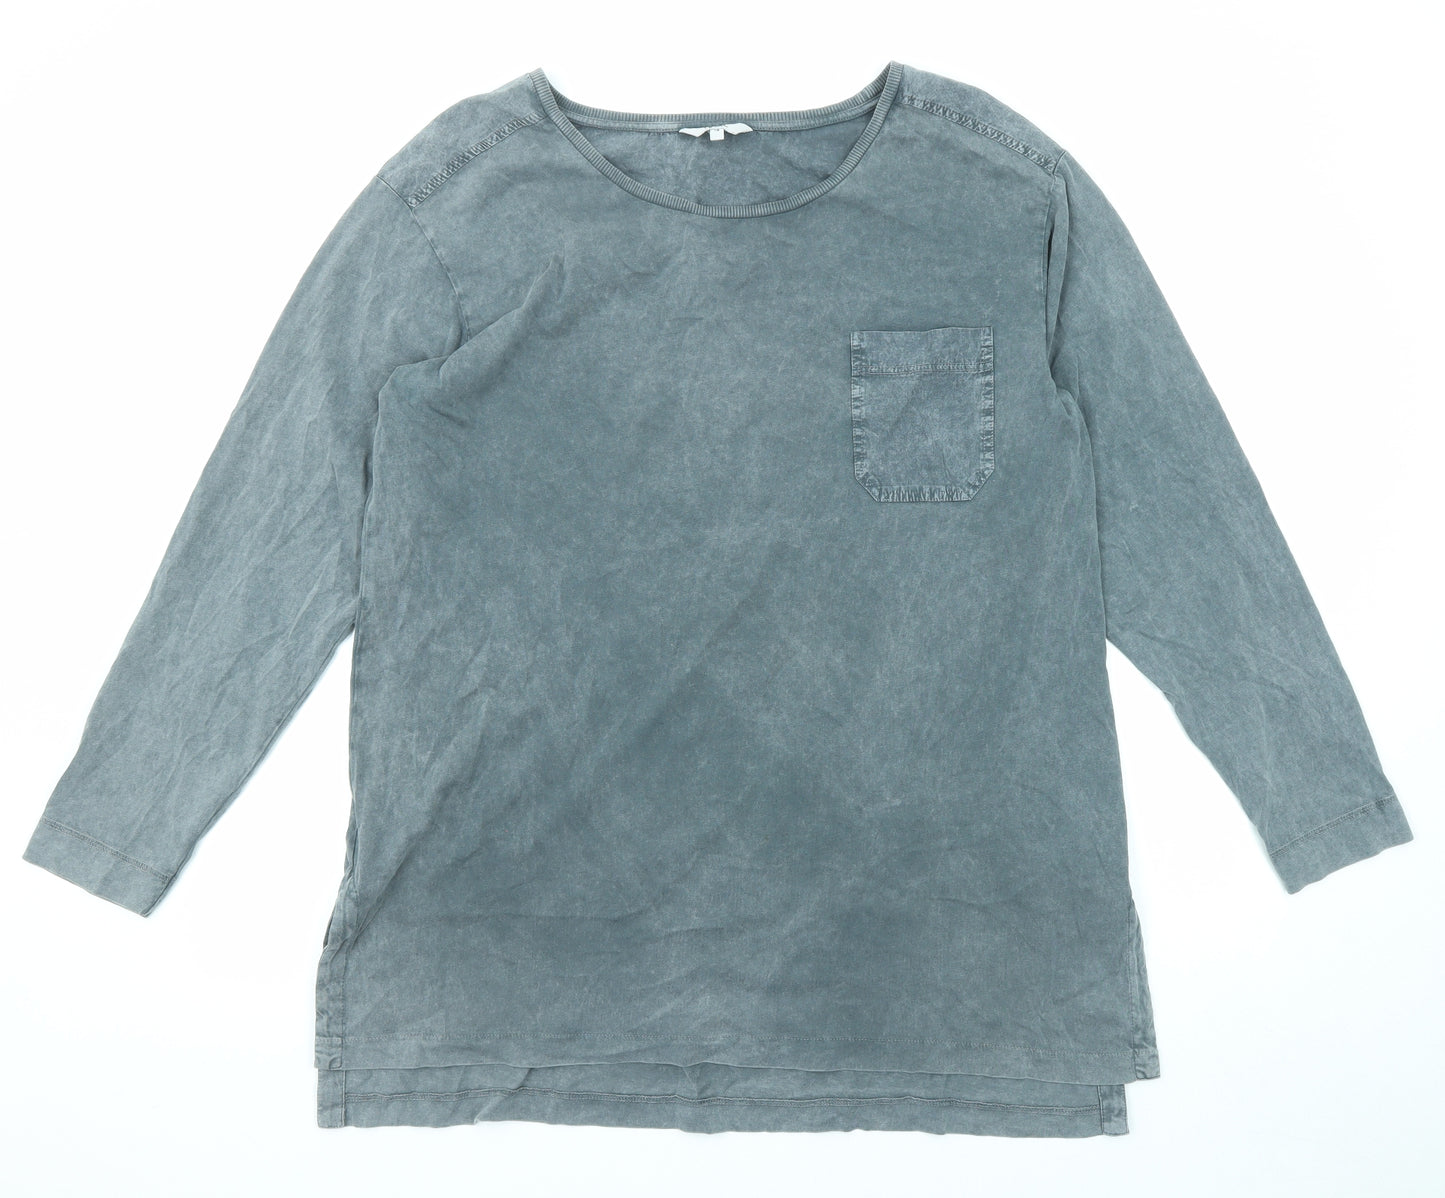 NEXT Womens Grey Cotton Basic T-Shirt Size 18 Round Neck